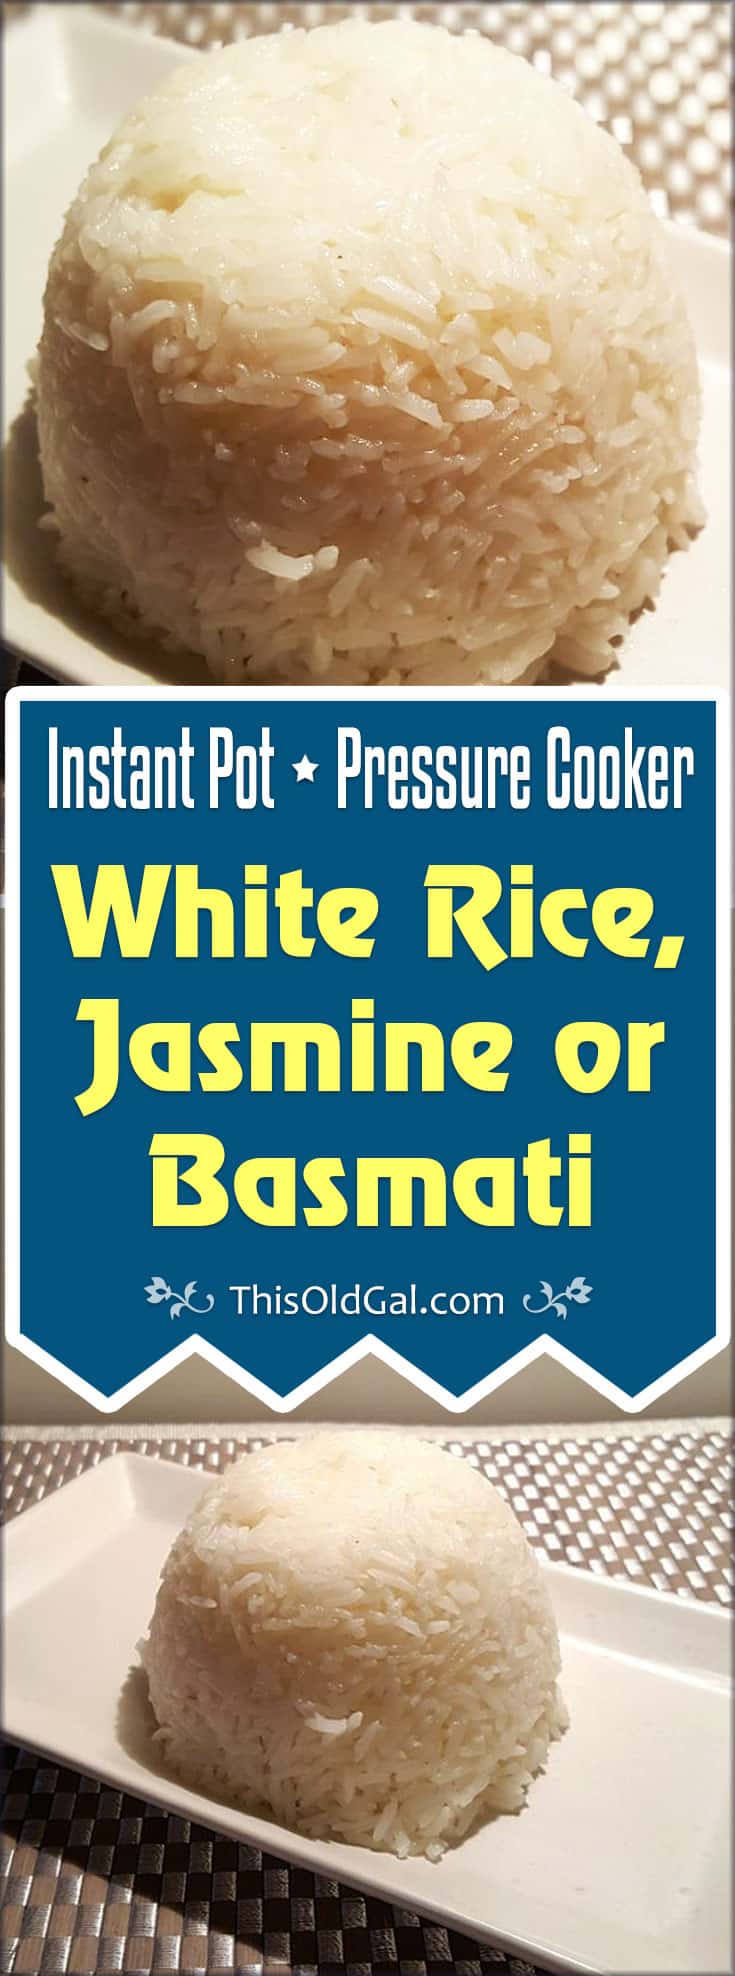 Instant Pot Pressure Cooker White Rice, Jasmine or Basmati